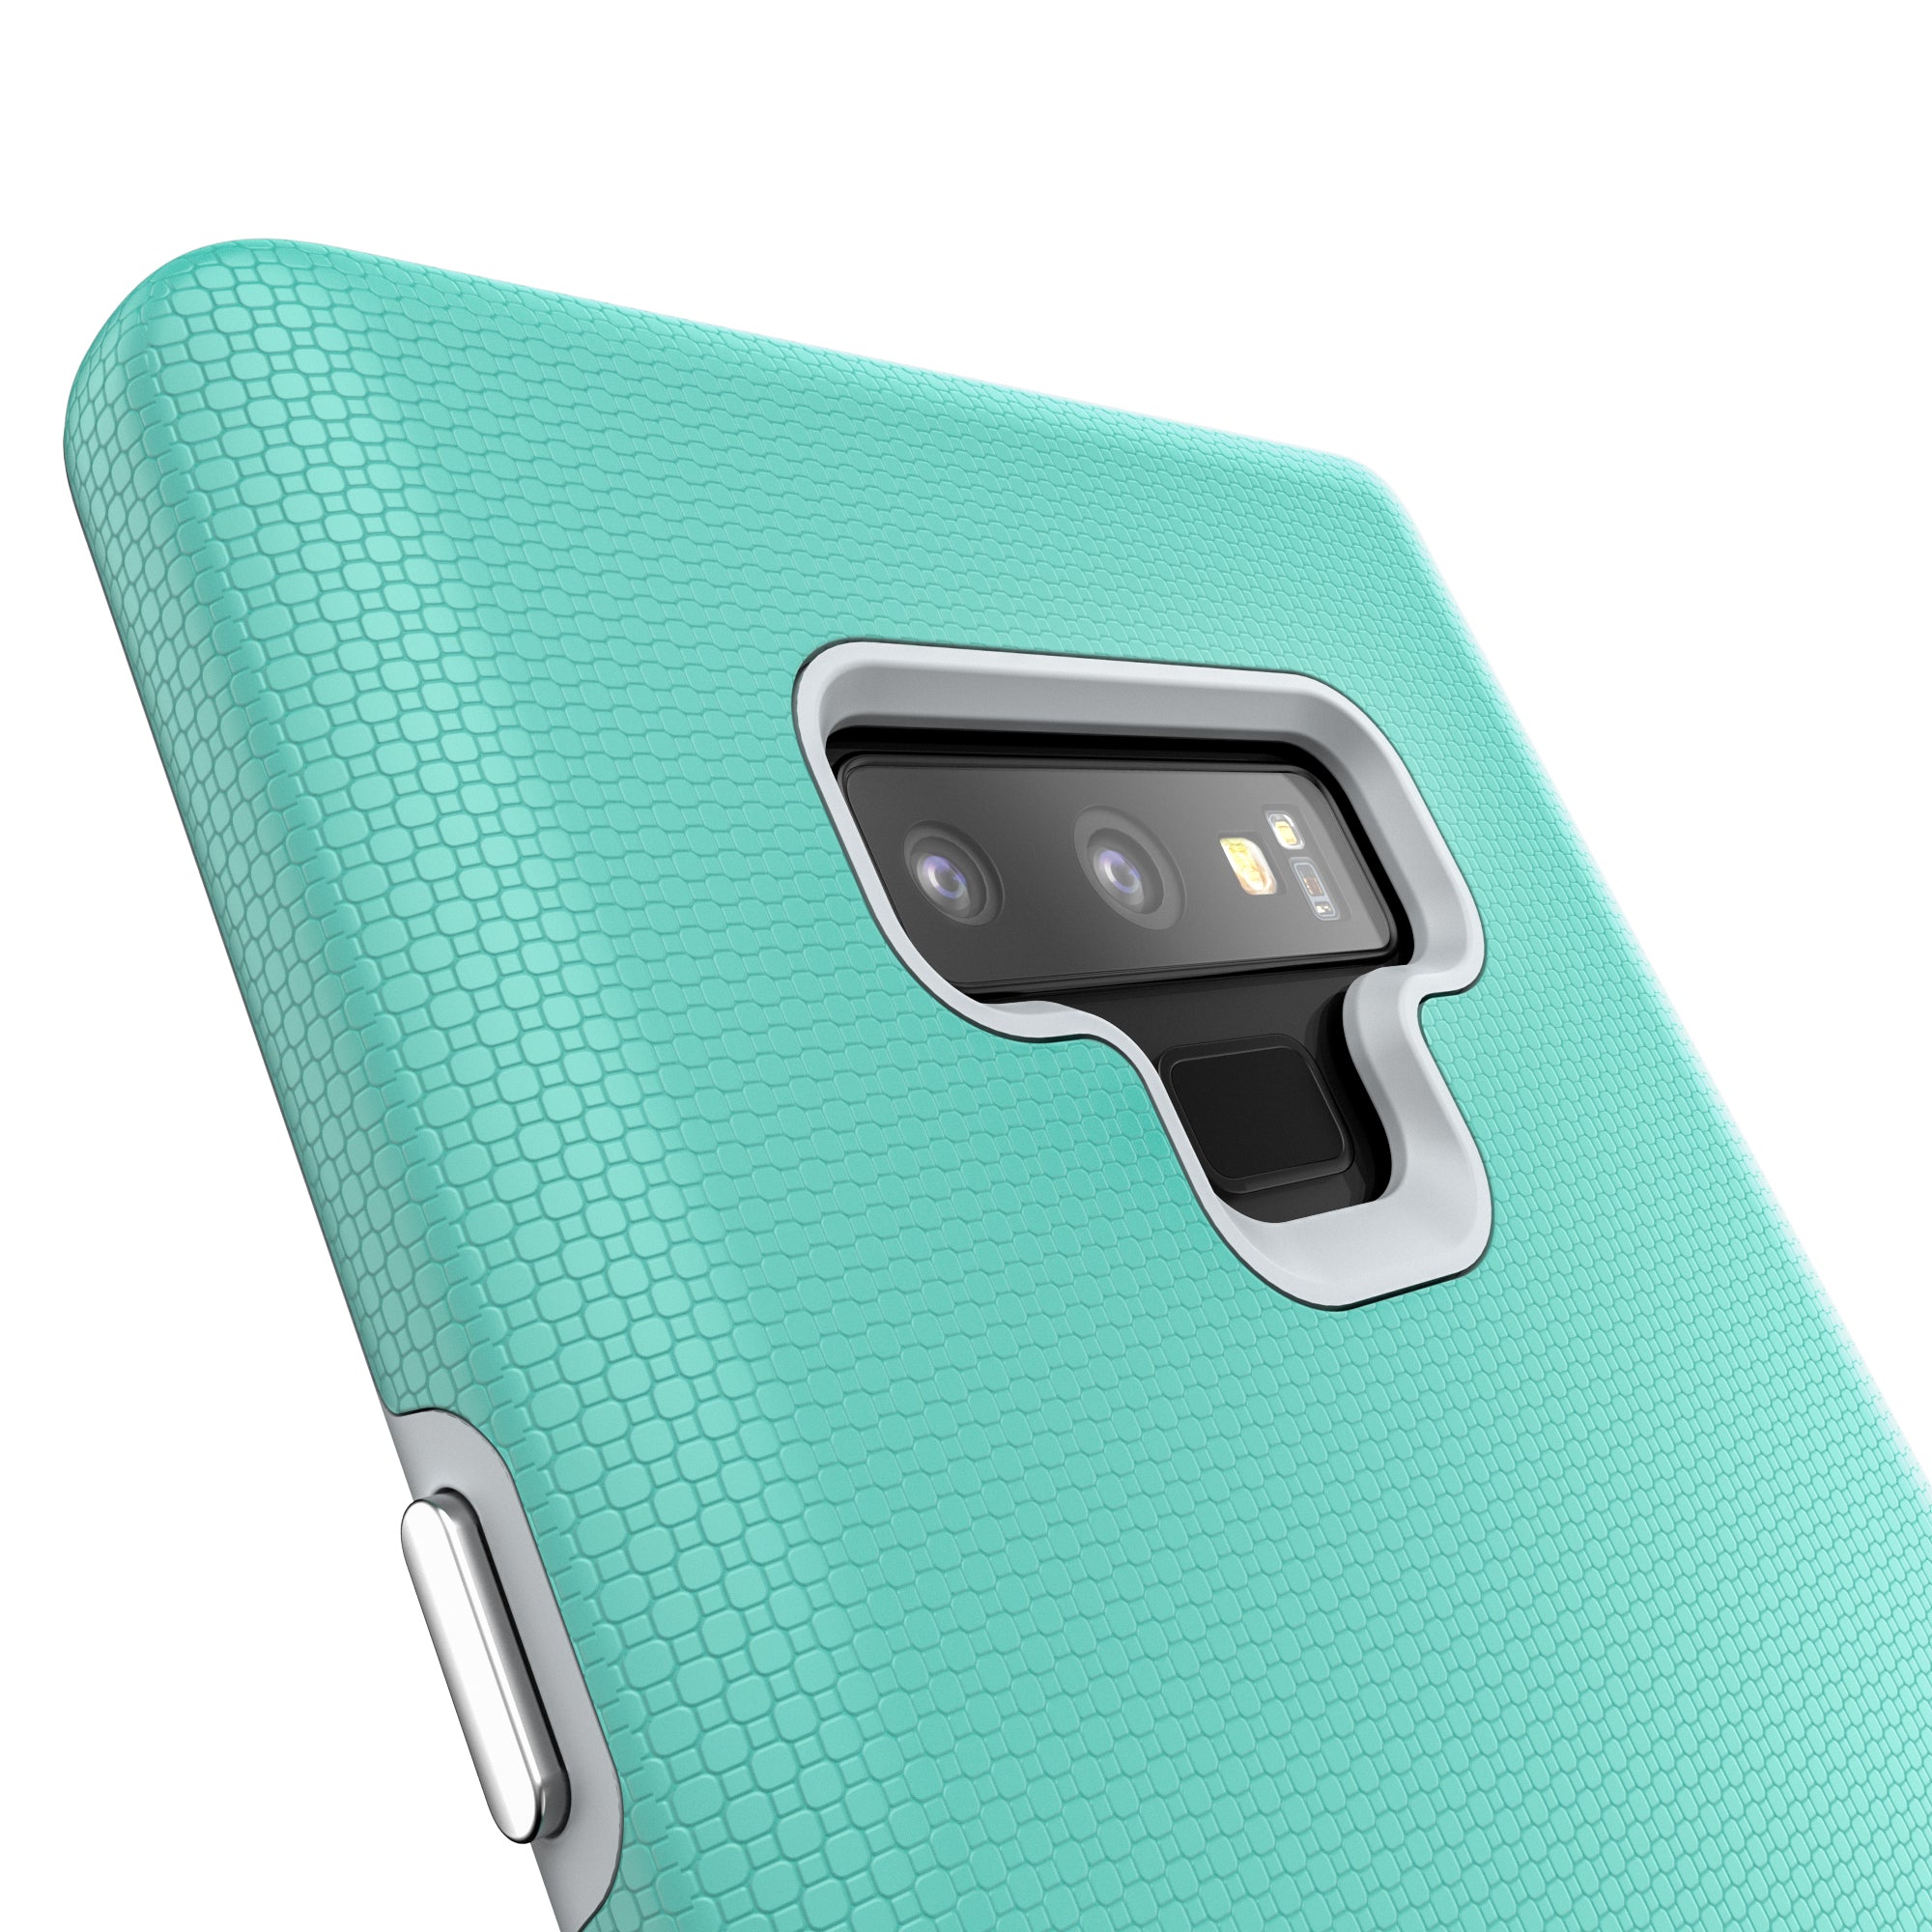 Galaxy Note 9 Case Dual Guard